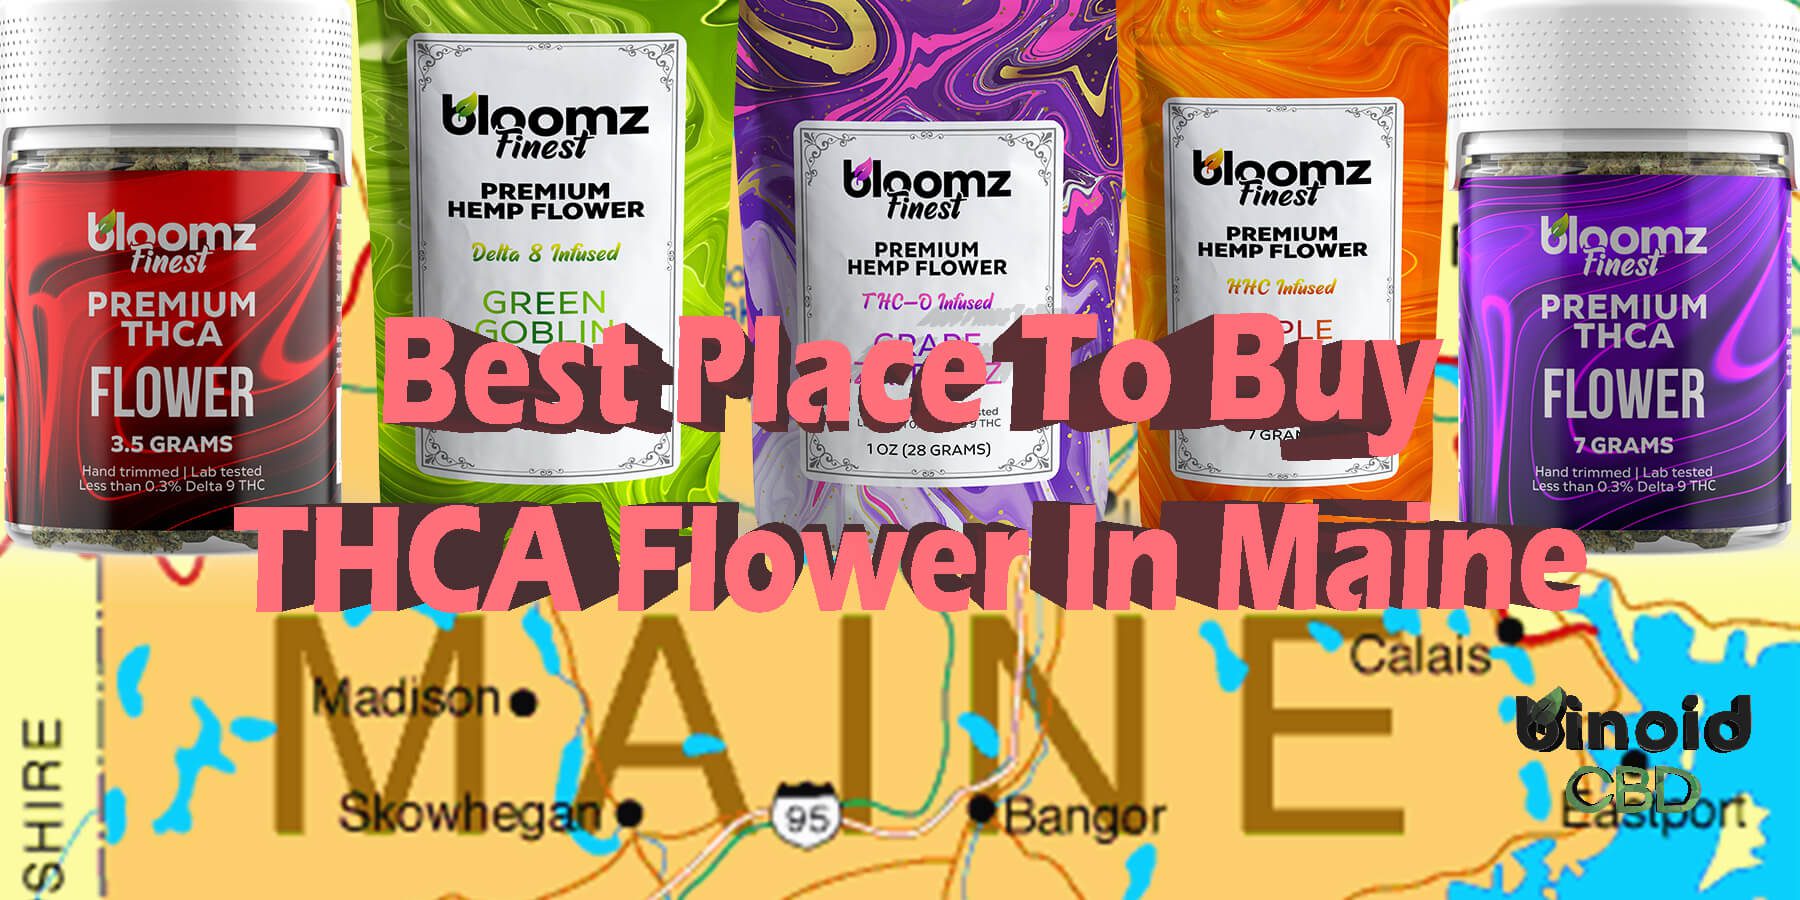 Buy THCA Flower In Maine Hemp Get Near Me Legal Strongest Best Brand Reddit Indoor Weed Real Dosage Drug Test Benefits Side Effects